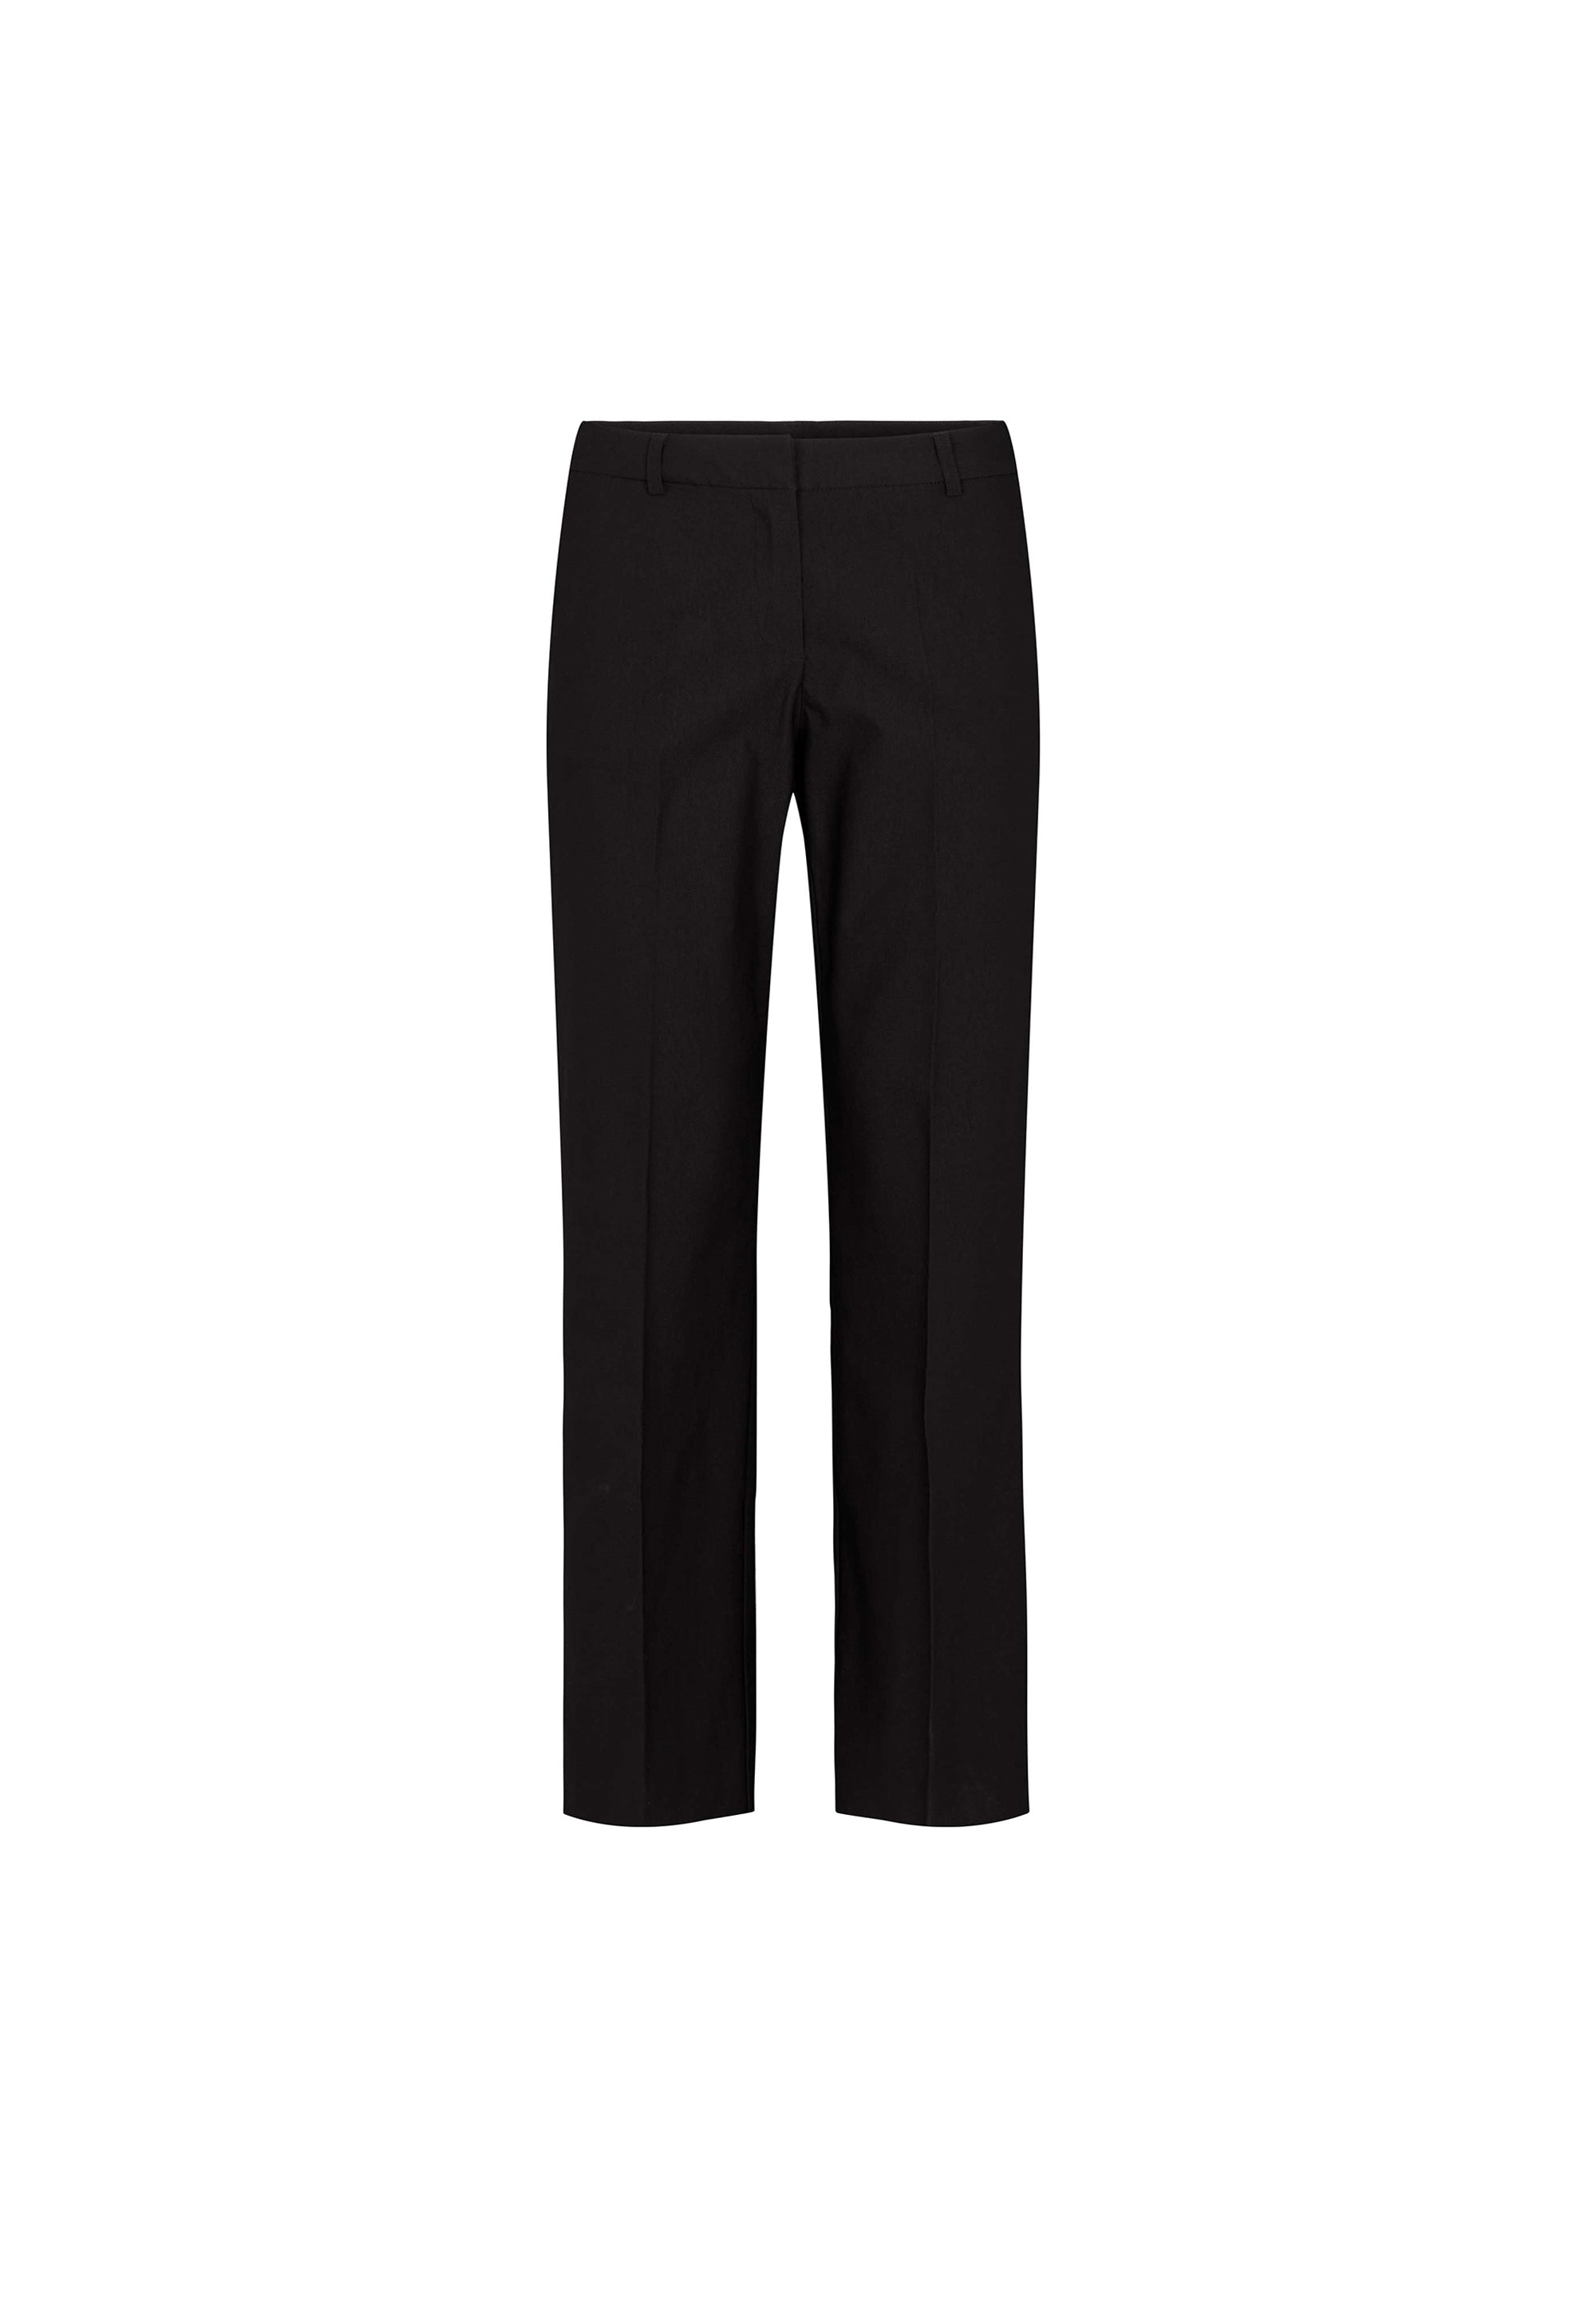 LAURIE Judy Straight - Medium Length Trousers STRAIGHT 99970 Black